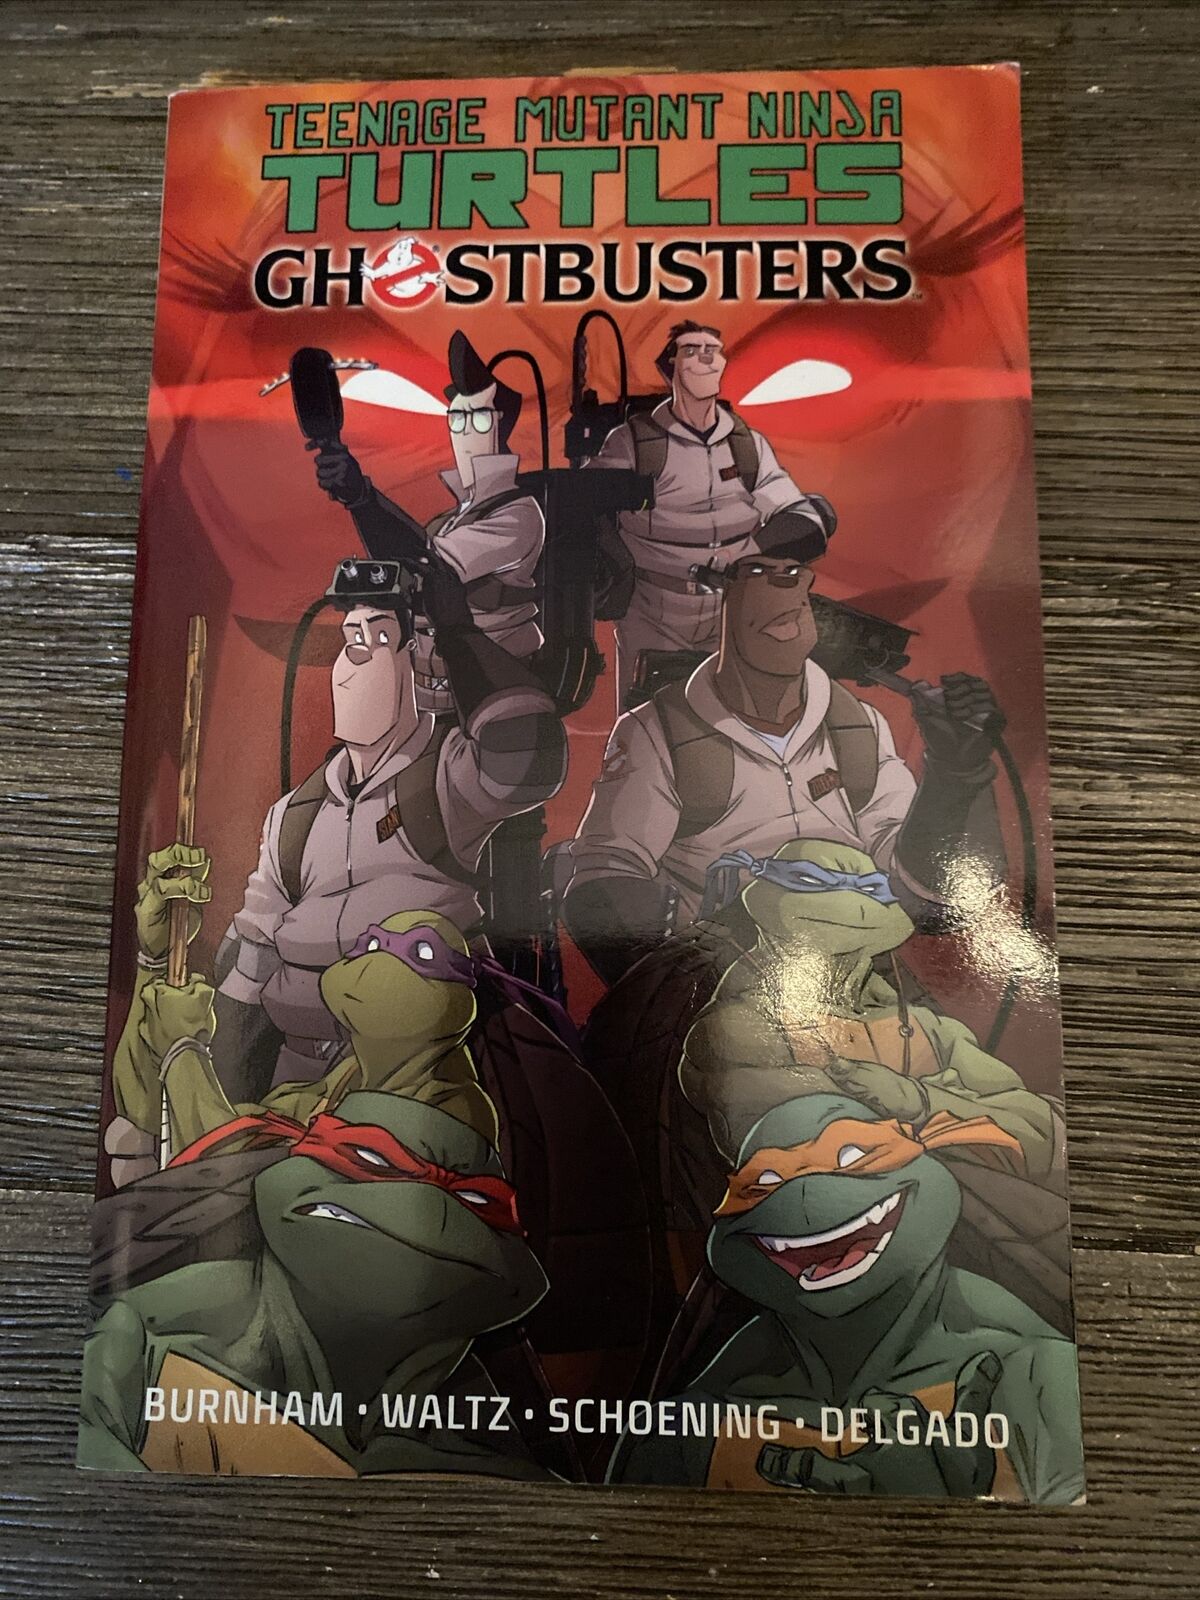 Teenage Mutant Ninja Turtles / Ghostbusters (IDW Publishing 2015)